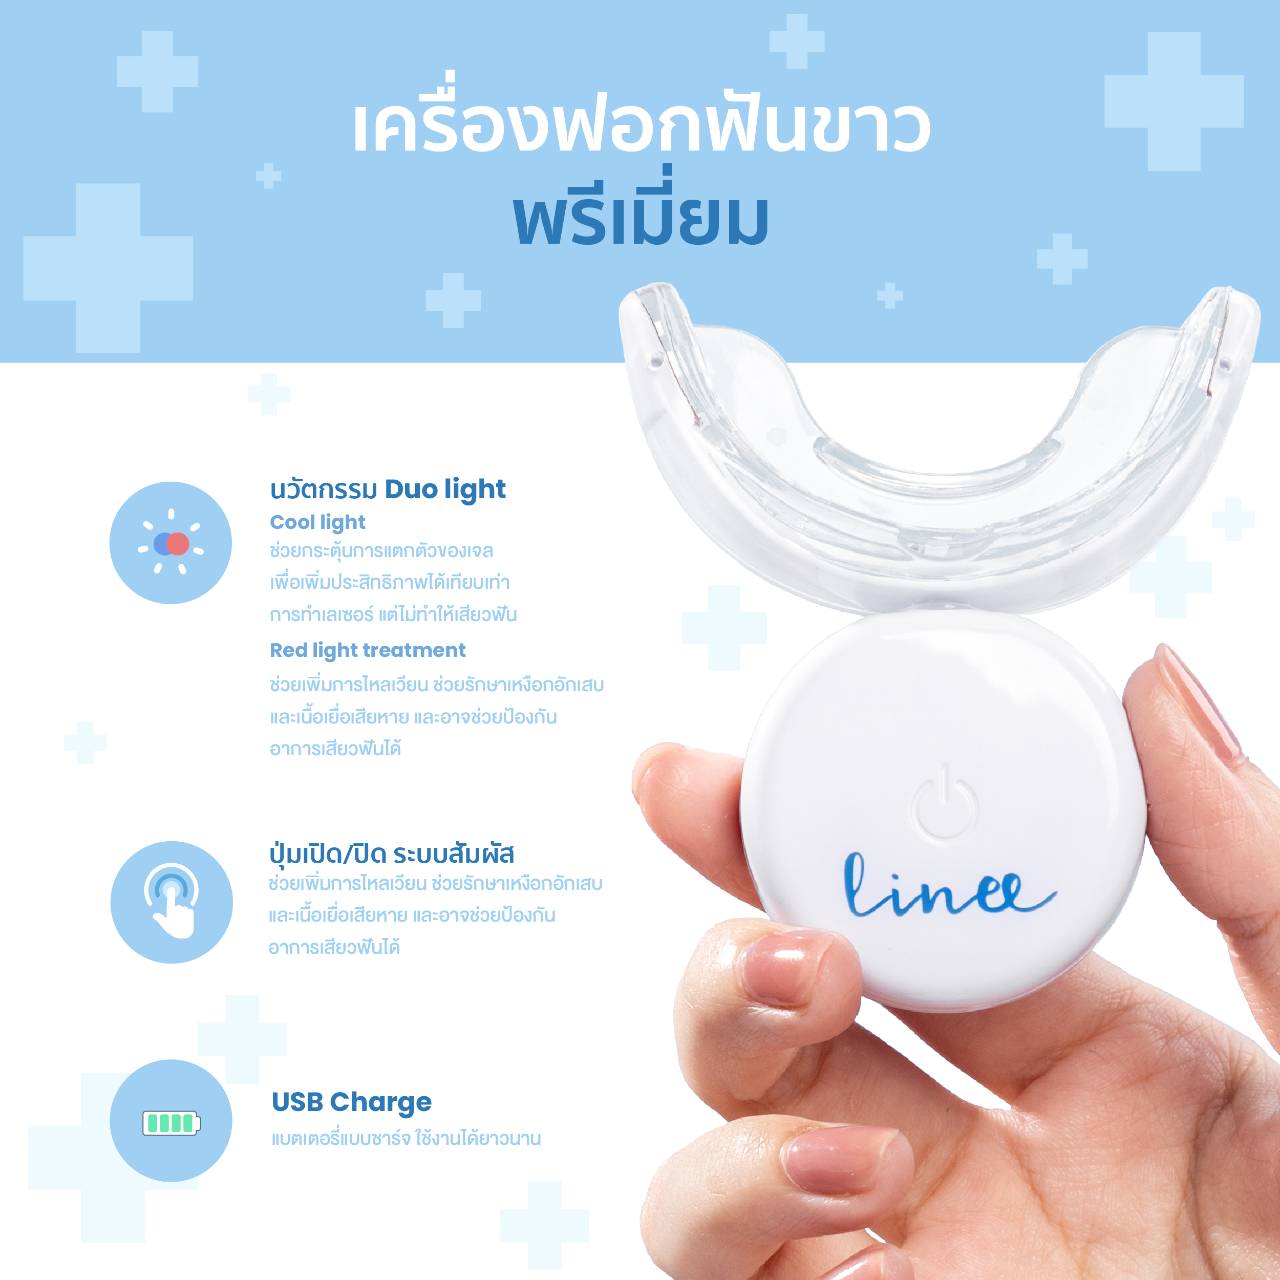 Linee Teeth Whitening kit Premium (original) อุปกรณ์ฟอกฟัน นวัตกรรมใหม่